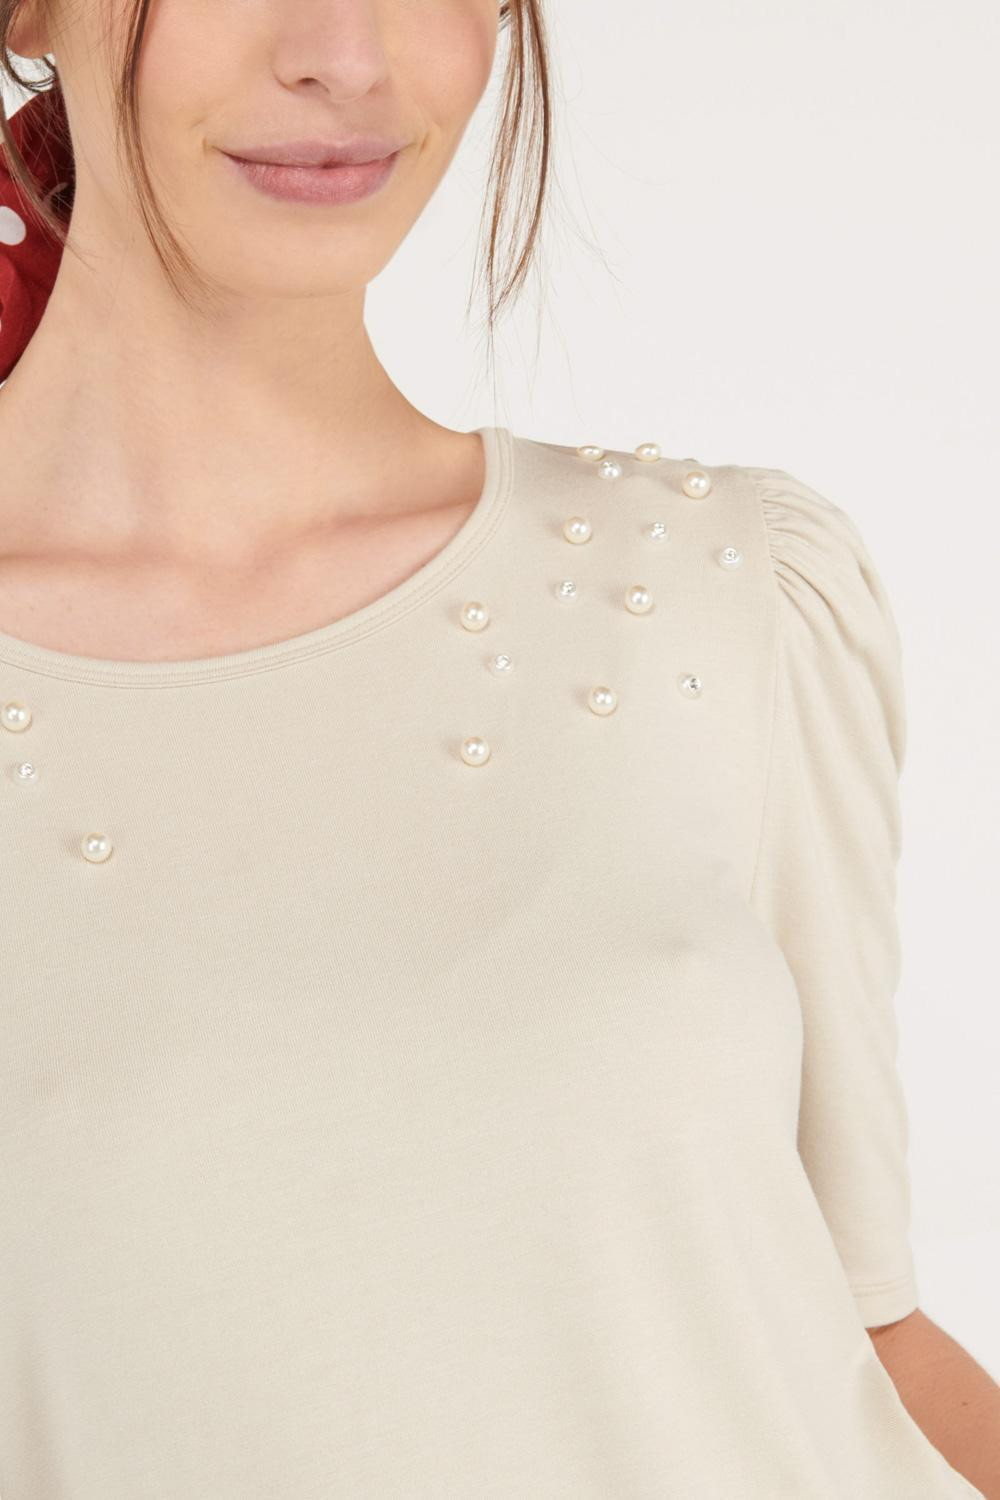 Camiseta kaky clara manga corta con decorado de perlas